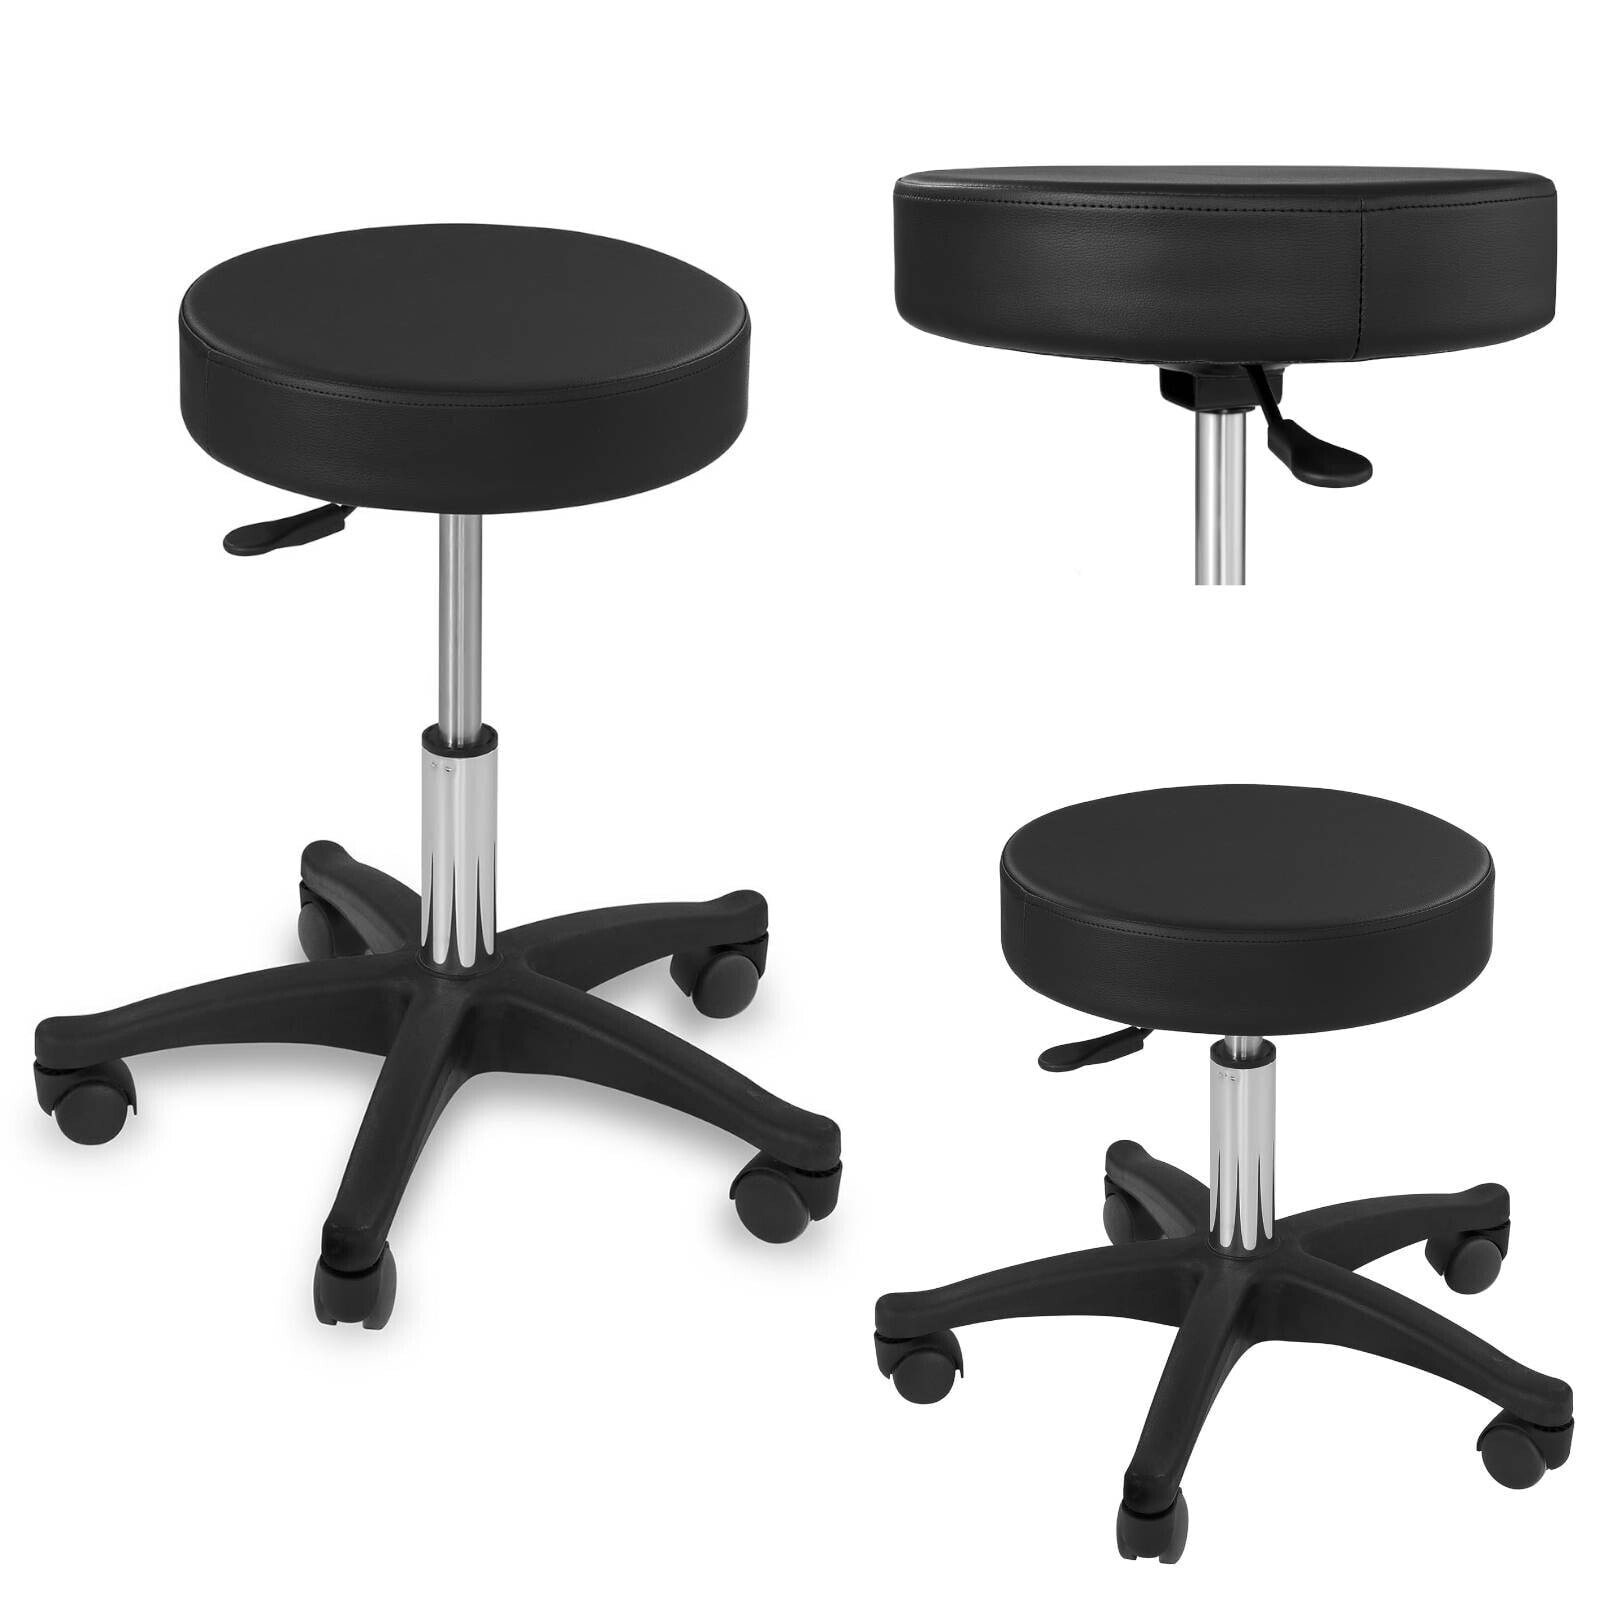 Stool, cosmetic swivel stool on Physa AVERSA wheels, black